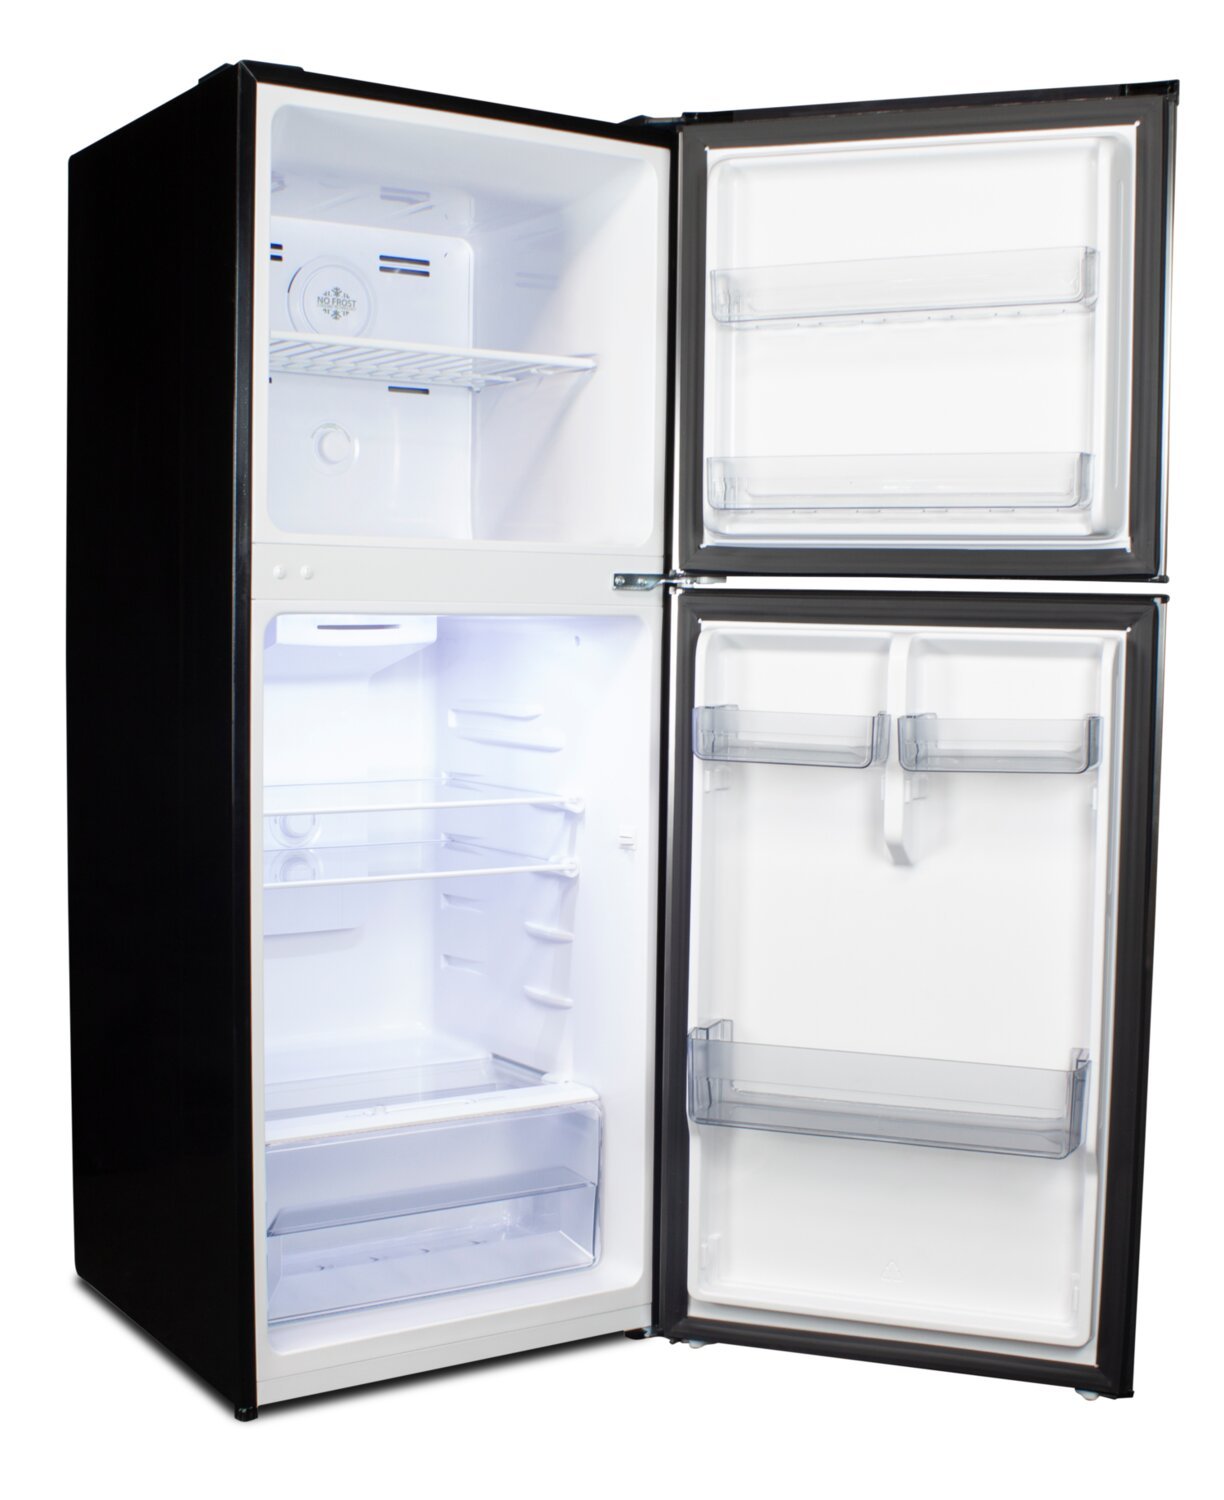 Danby 7 Cu. Ft. Apartment Size Top-Freezer Refrigerator - DFF070B1BSLDB ...